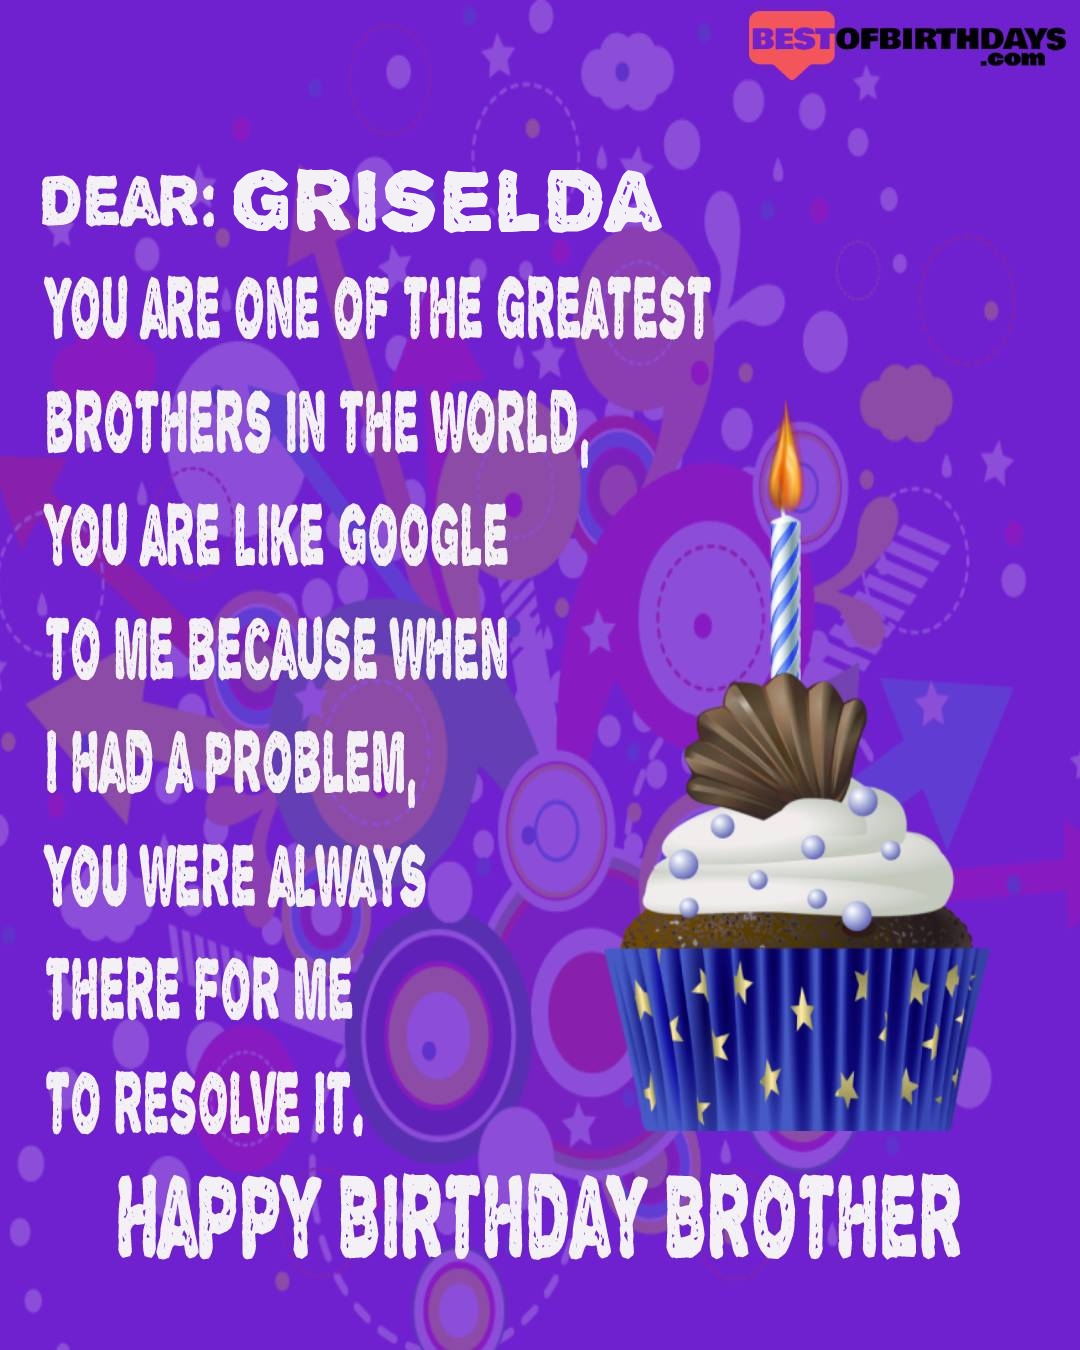 Happy birthday griselda bhai brother bro